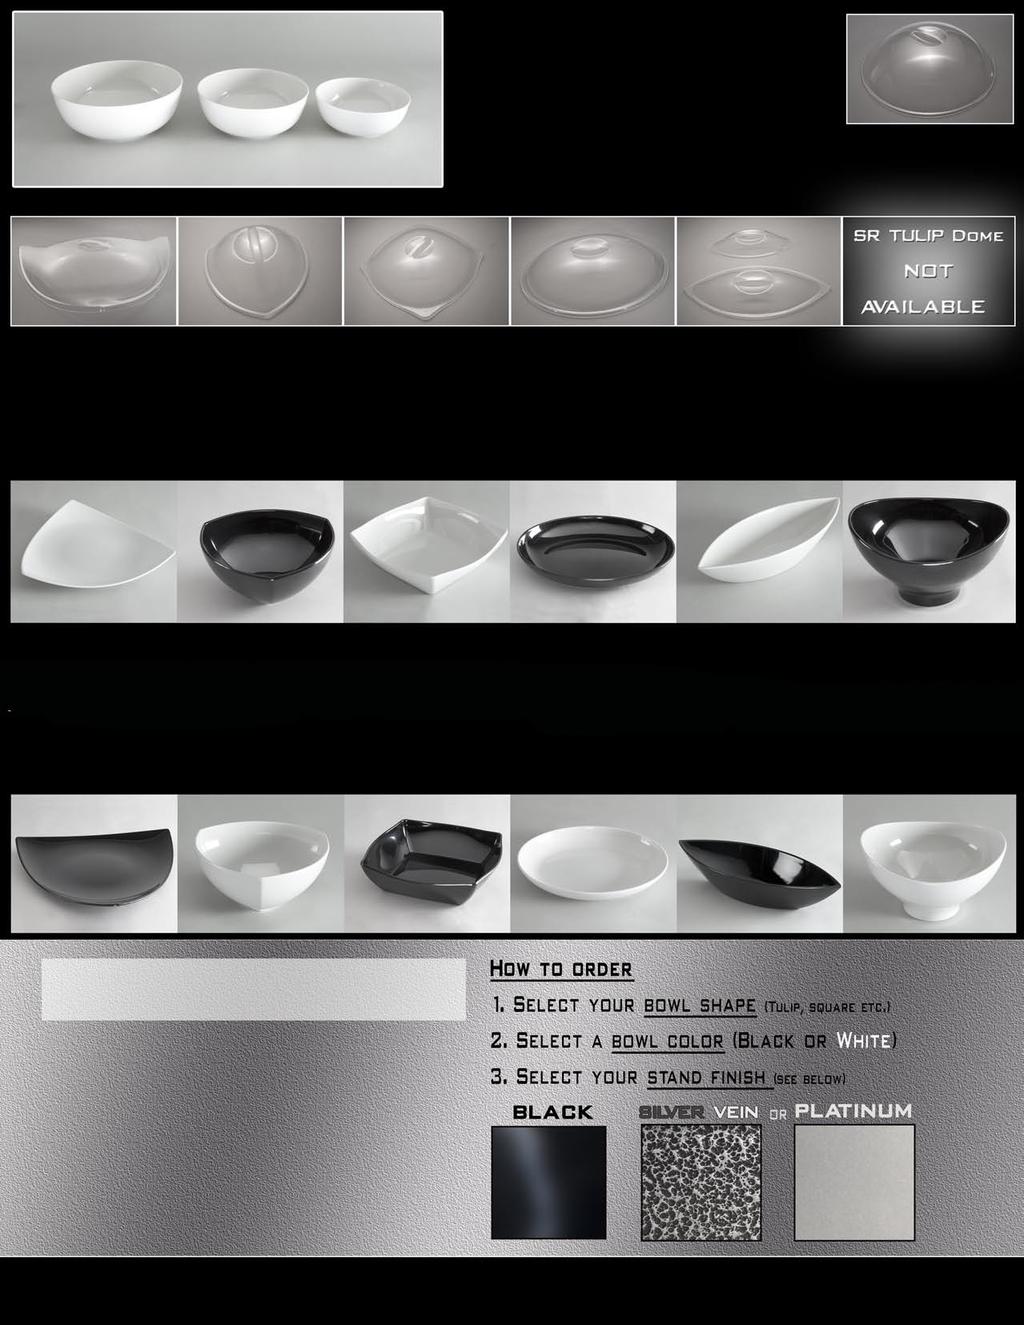 Black bowls also available SR RND BOWL LG SR RND BOWL MD SR RND BOWL SM SR RND BOWL LG 15 Round Bowl (h) 6-15 cm (d)15-38 cm (wt) 3½ lbs-1¾ kg Capa. 19 qts-43 lbs Capa.